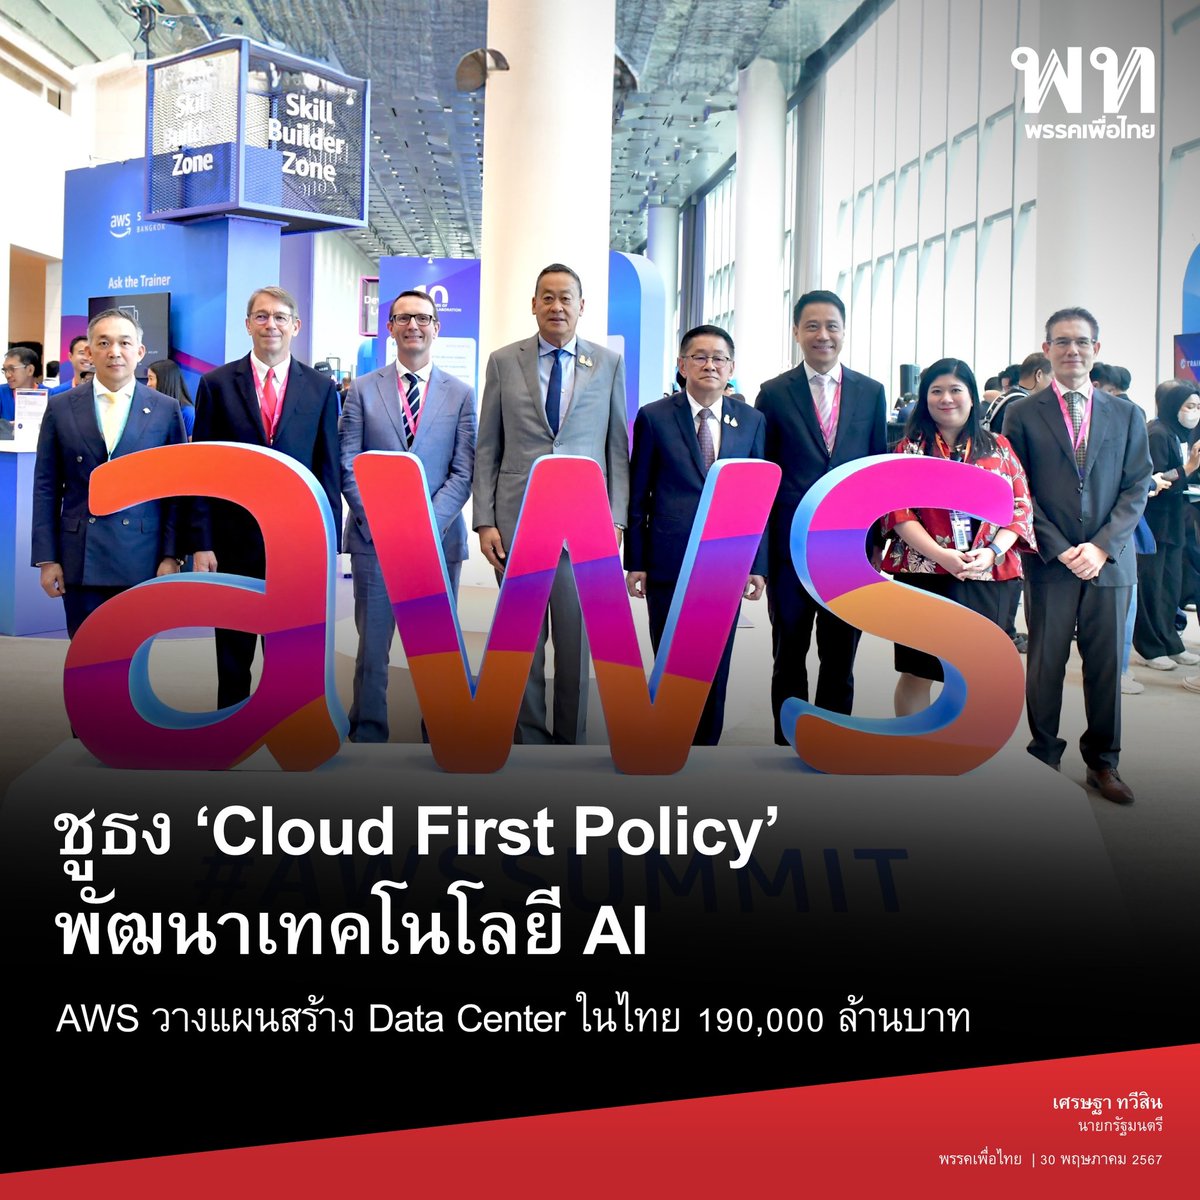 • AWS วางแผนสร้าง Data Centerในไทย 190,000 ล้านบาท ชู Cloud First Policy •

นายกรัฐมนตรี เปิดงาน AWS Summit in Bangkok พร้อมเผย AWS มีแผนลงทุนสร้าง Data Center ในประเทศไทย มูลค่ากว่า 190,000 ล้านบาท ภายในปี 2580 

Key points 

▪️เศรษฐา ทวีสิน @Thavisin